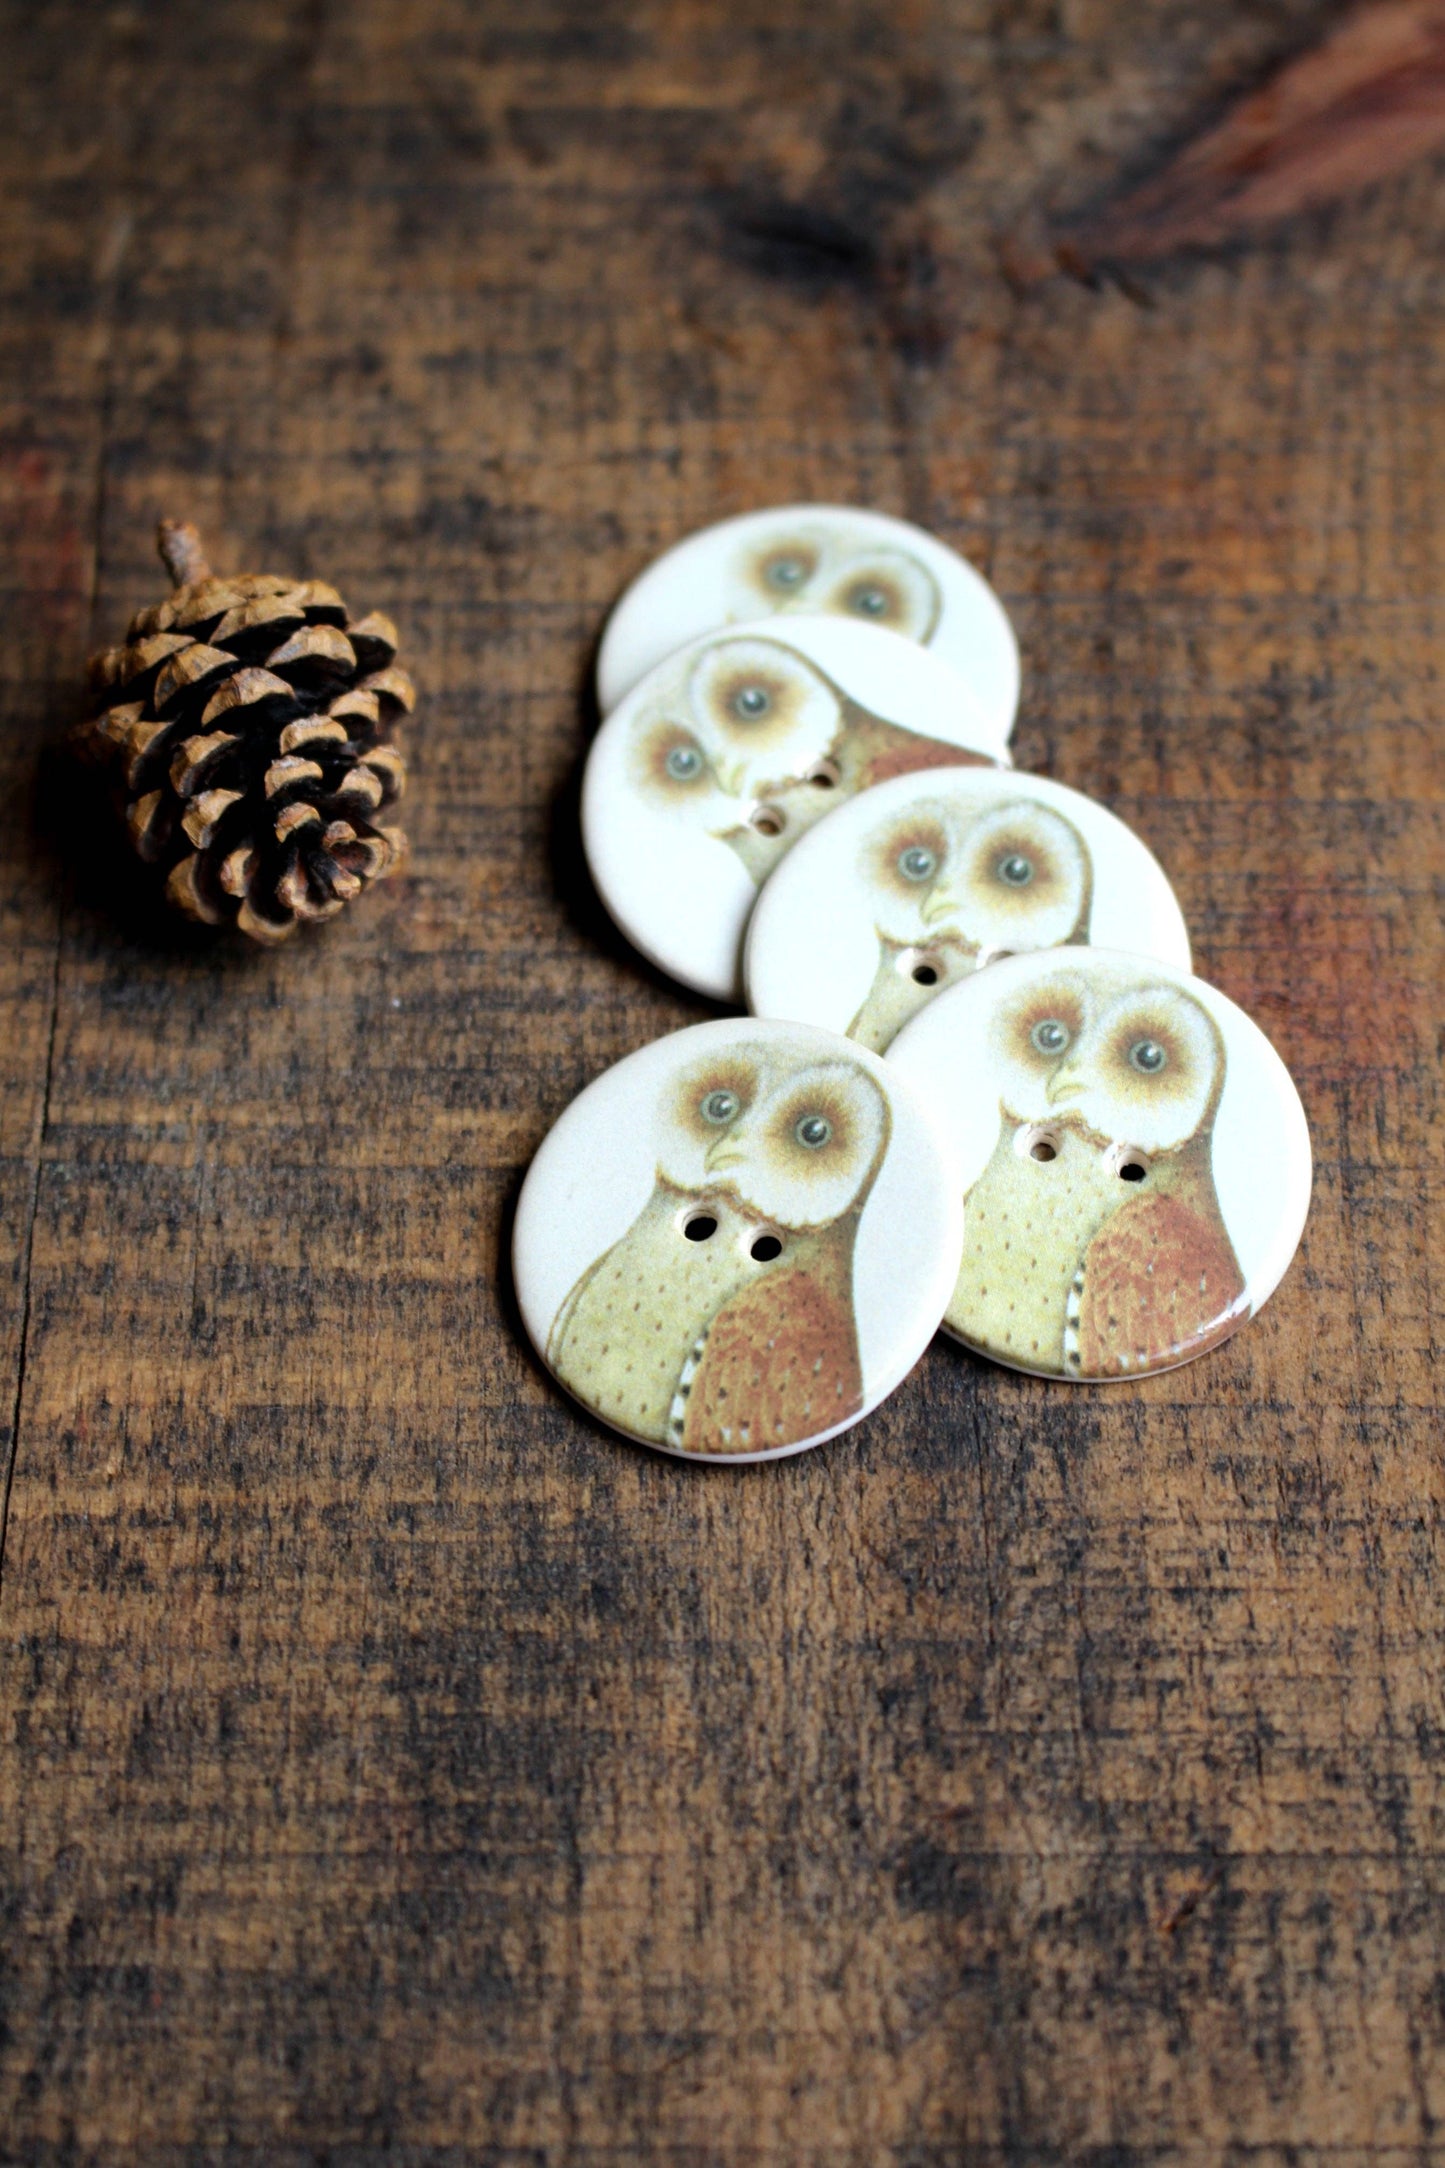 Ceramic Buttons Handmade - Flying Friends